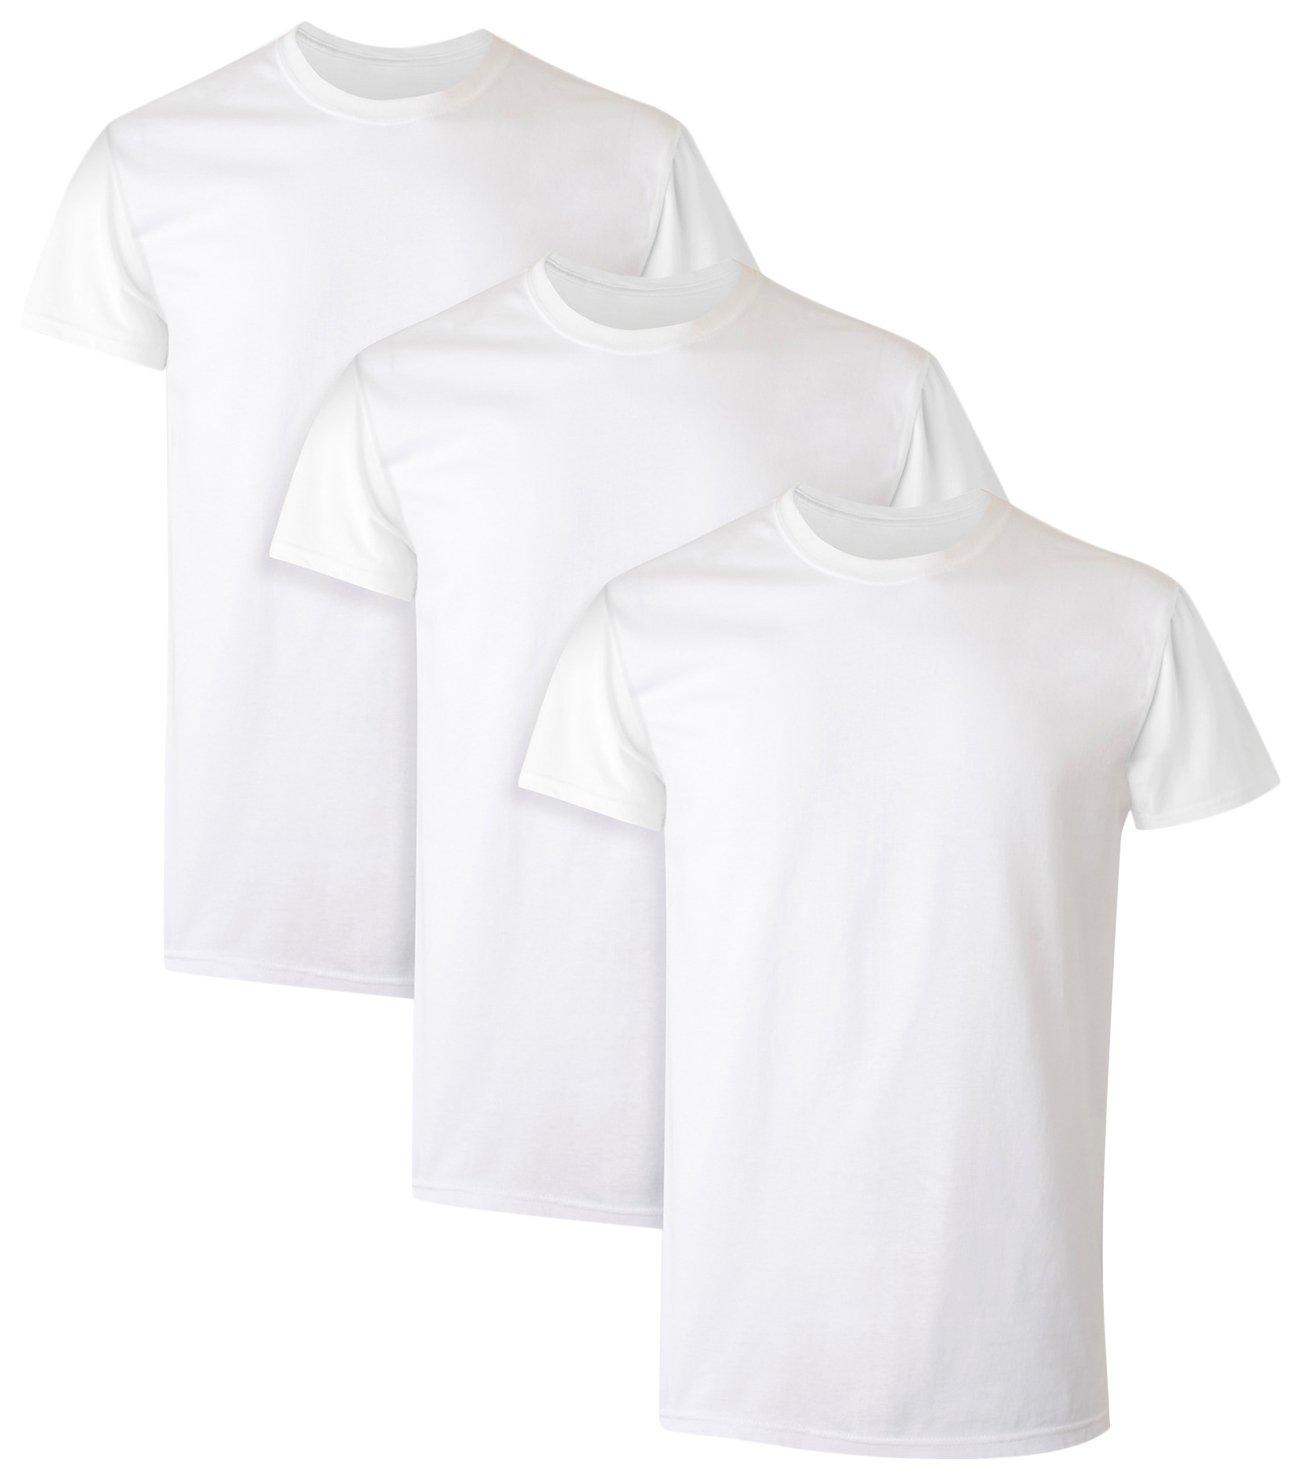 Mens 3-Pk. Cotton Crew Neck Tagless T-Shirts